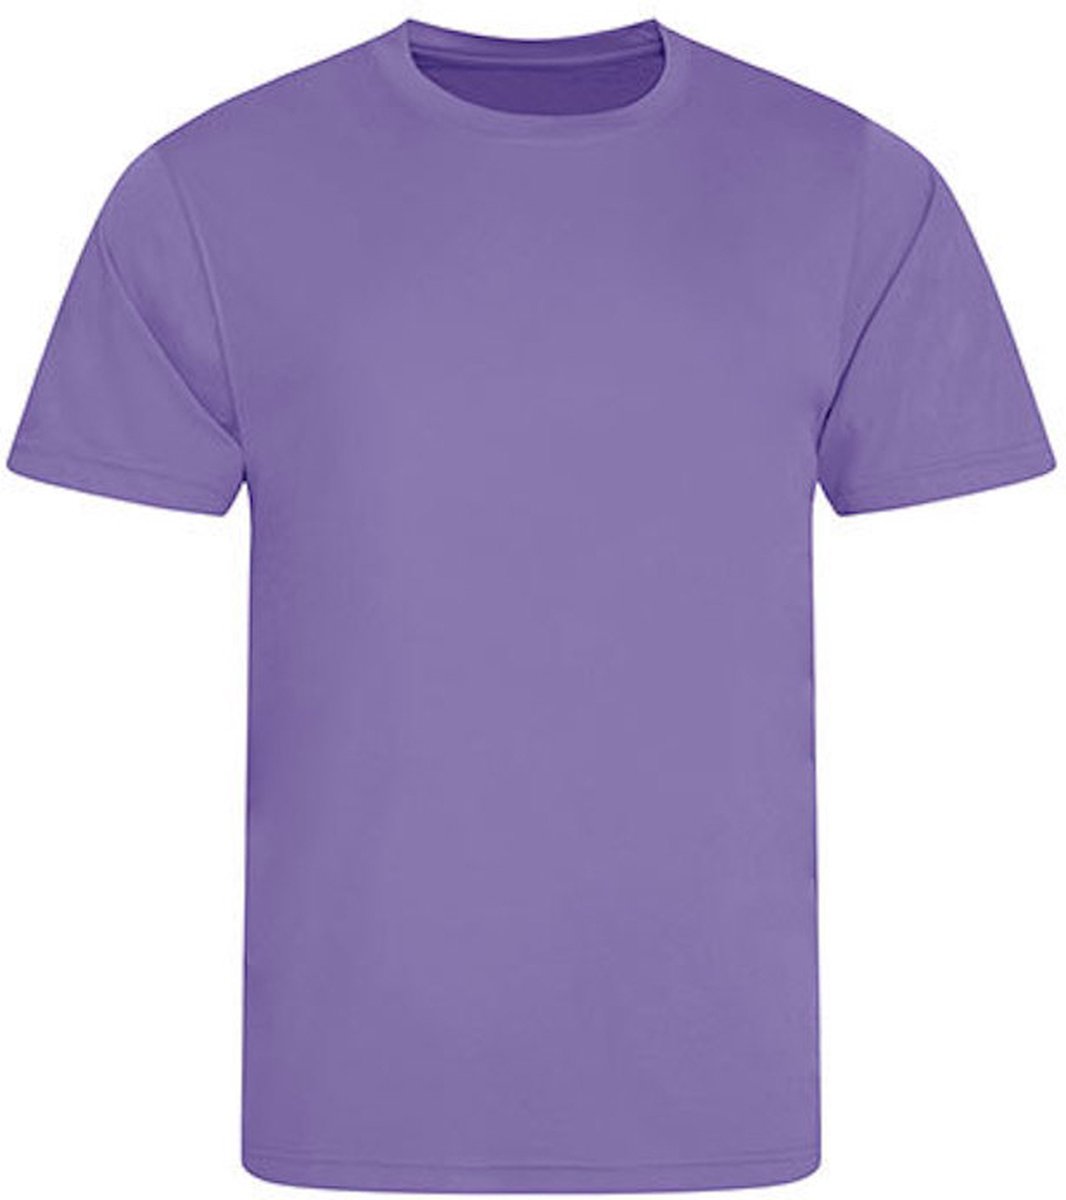 Herensportshirt 'Cool Smooth' Lavender - XL